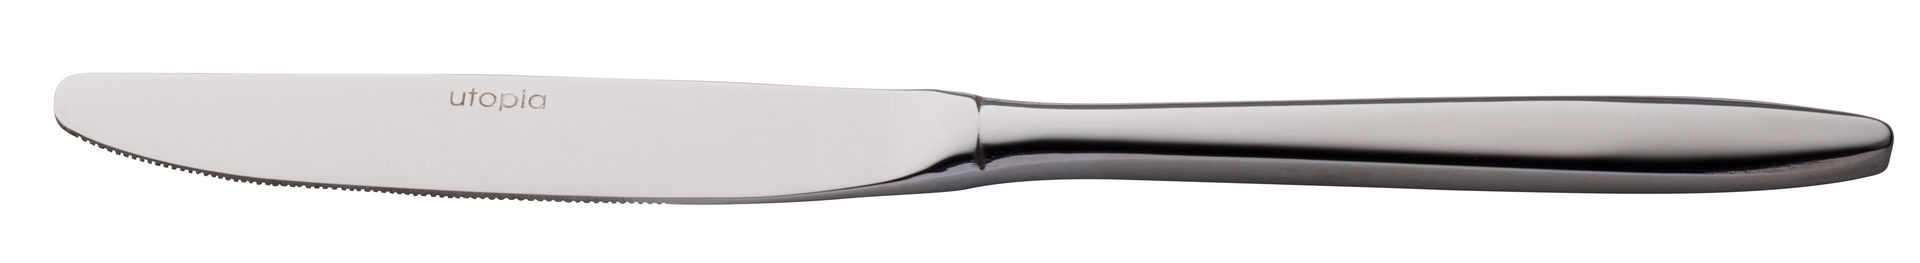 Teardrop Table Knife - F10002-000000-B01012 (Pack of 12)